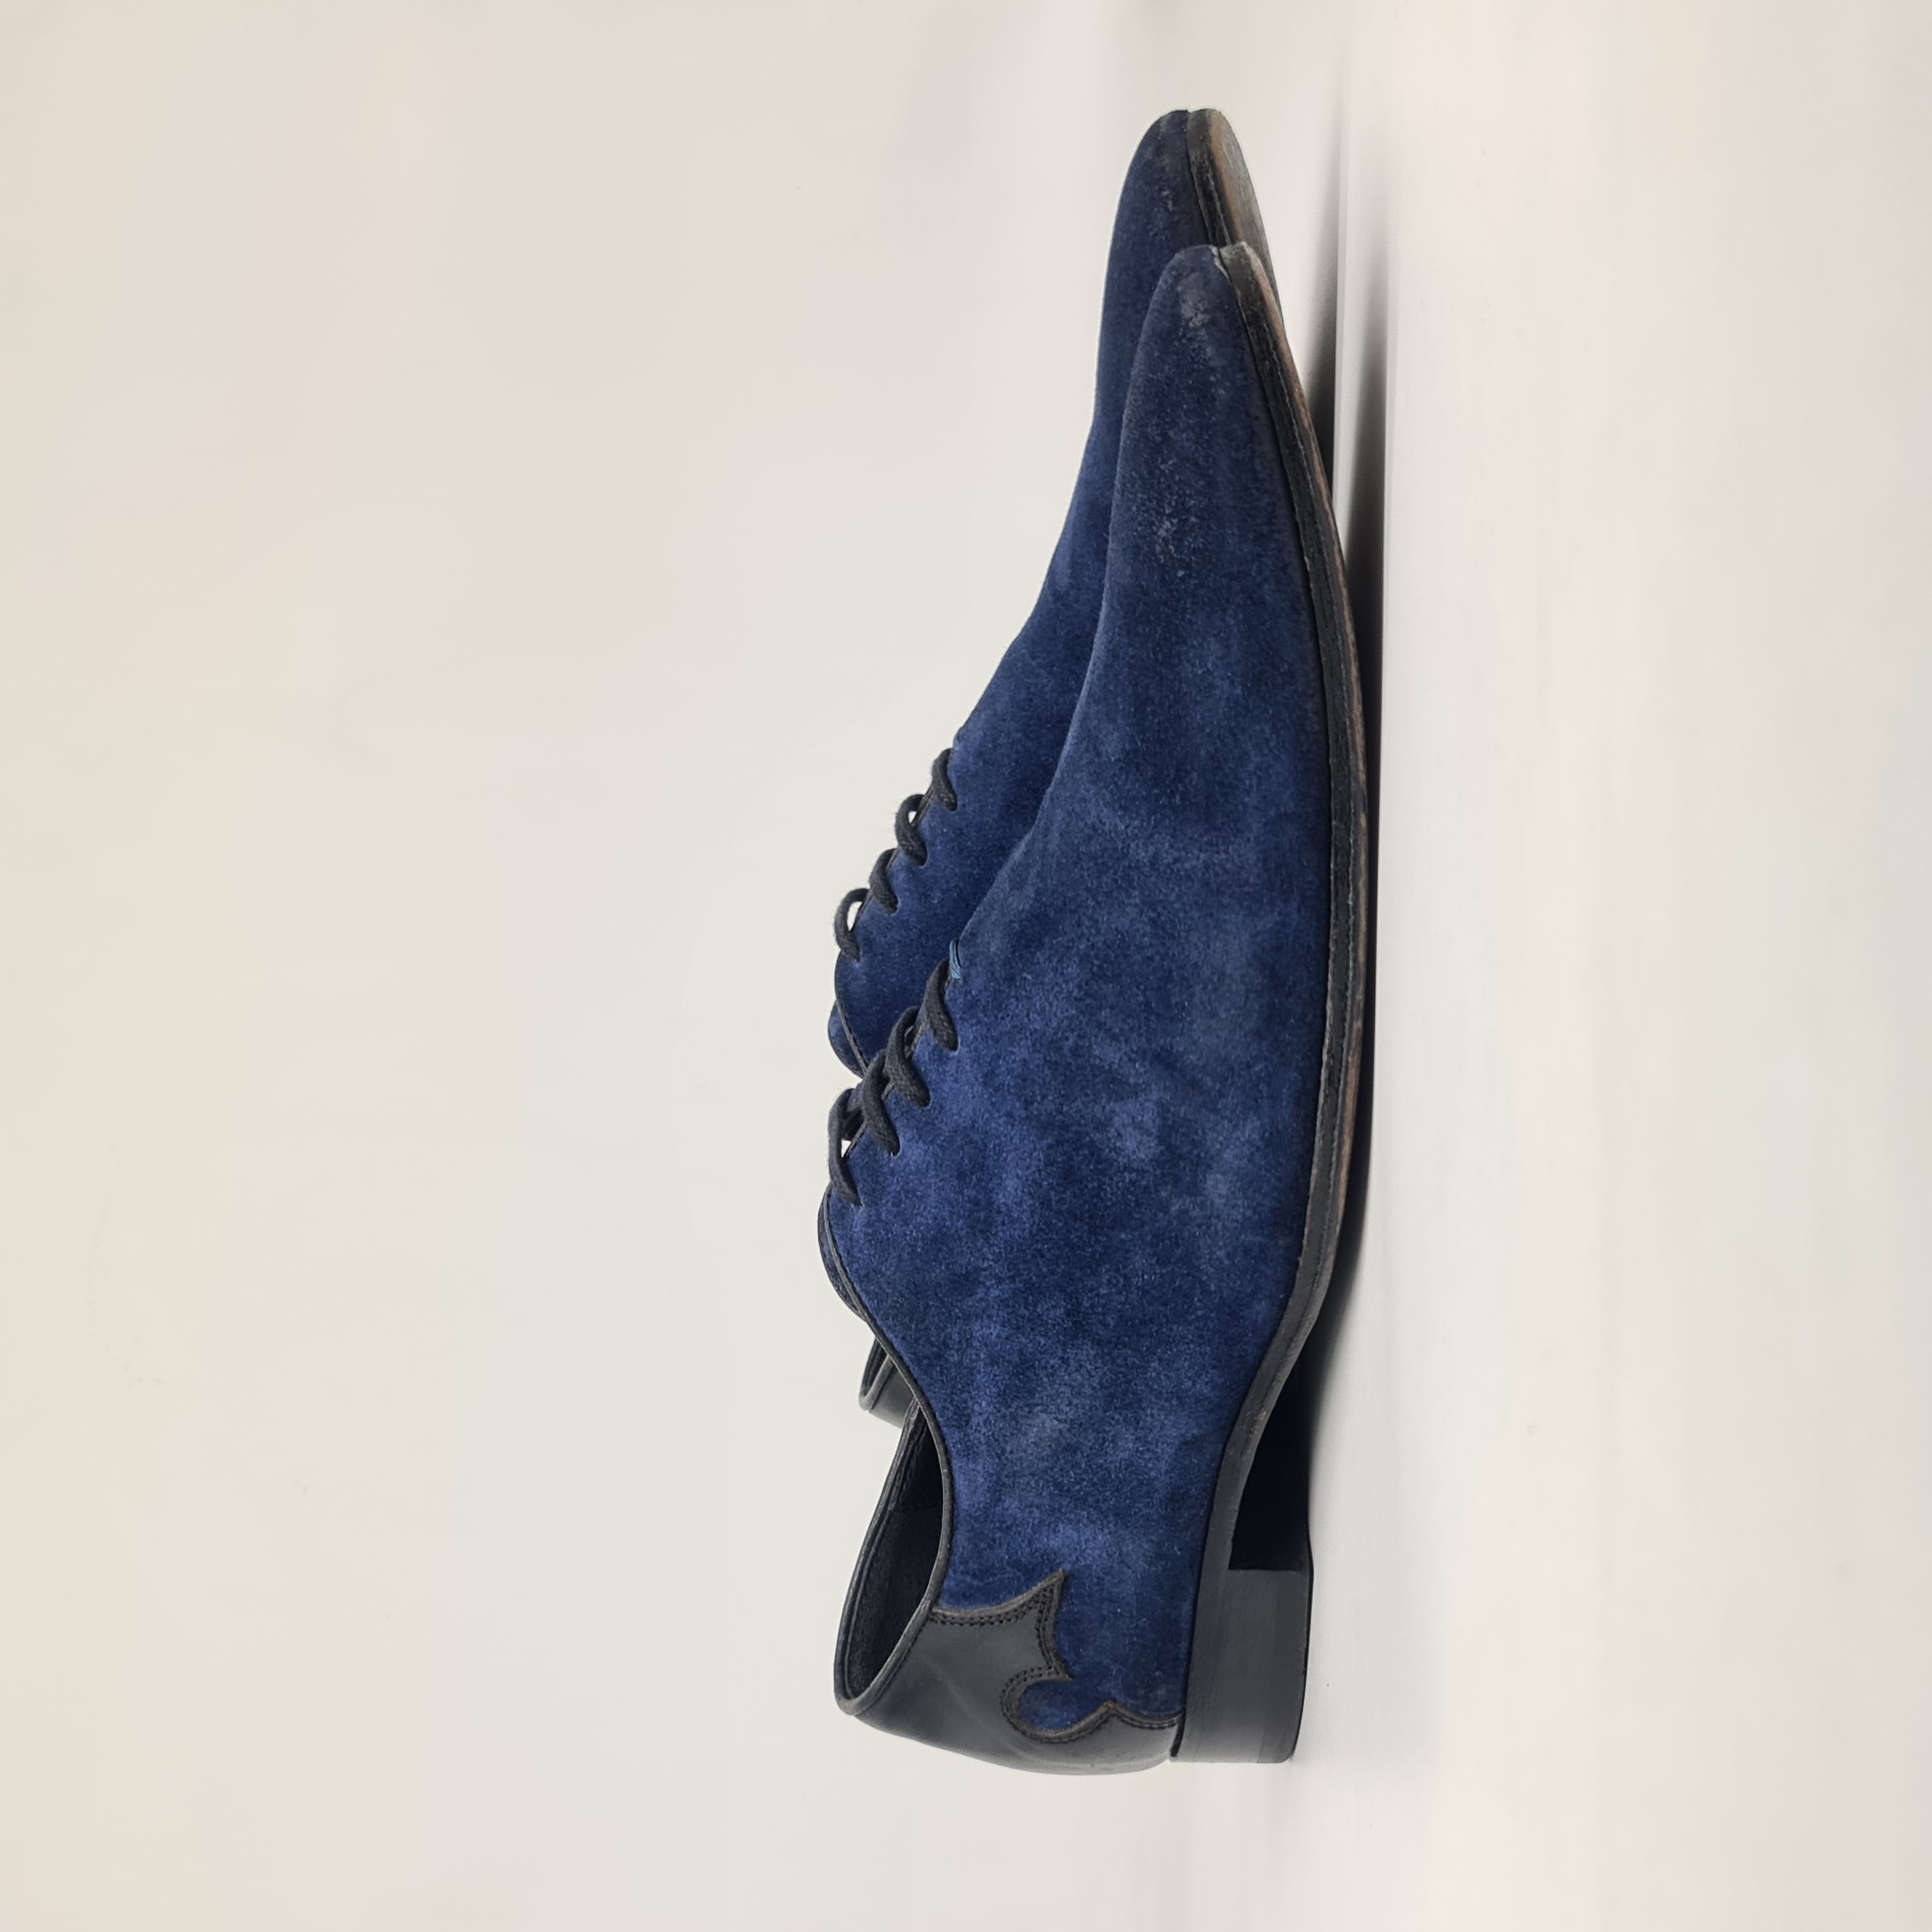 Haider Ackermann - SS16 Runway Blue Suede Oxford Shoes - 1